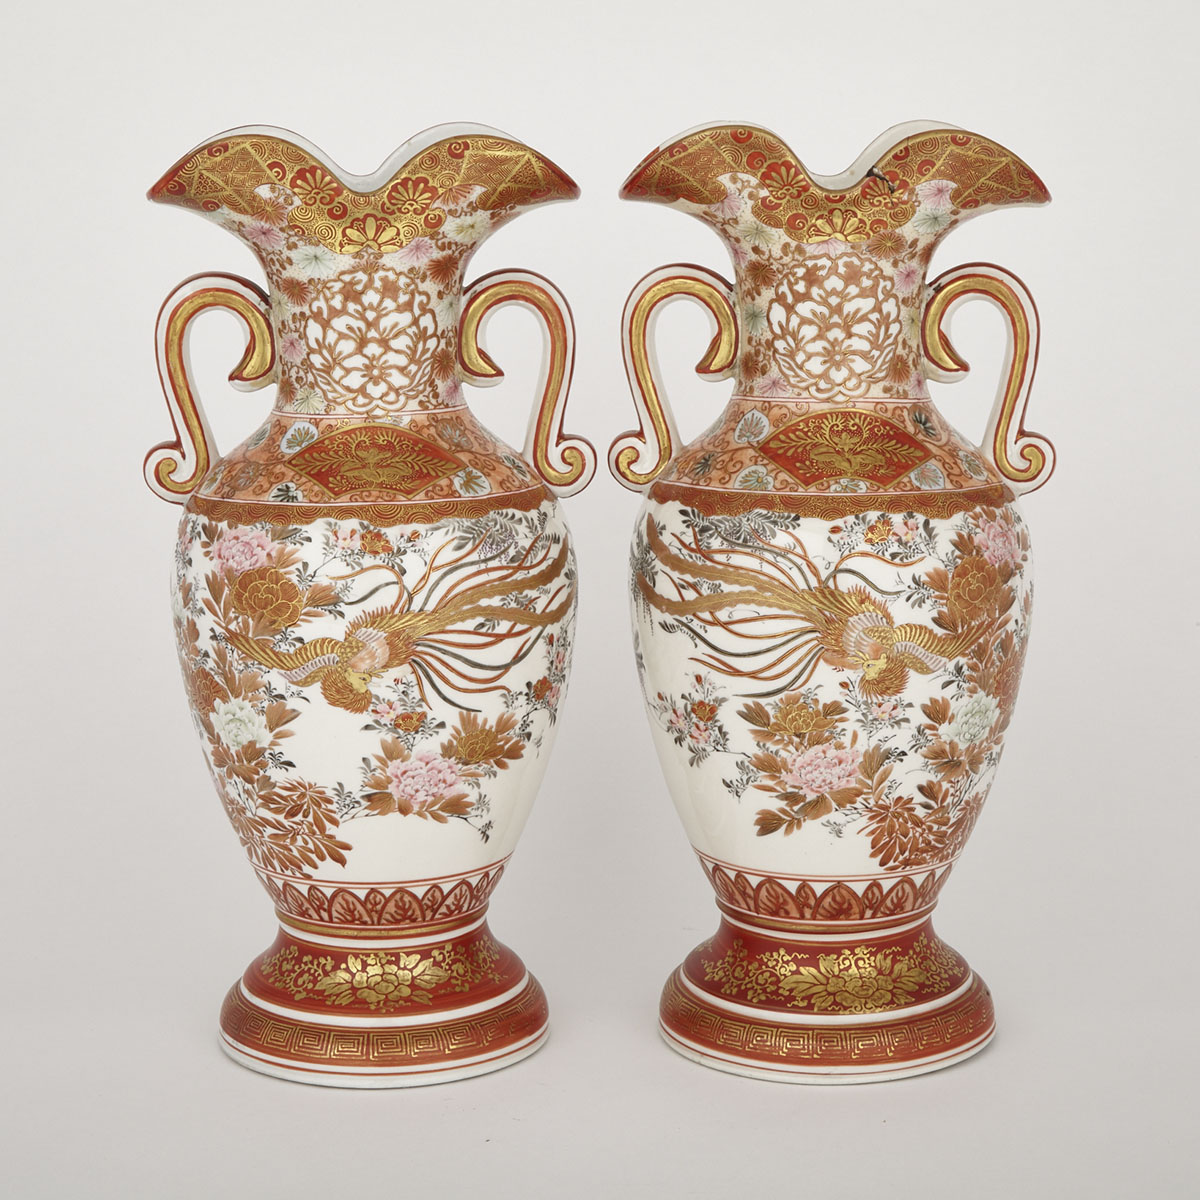 Pair of Japanese Export Vases